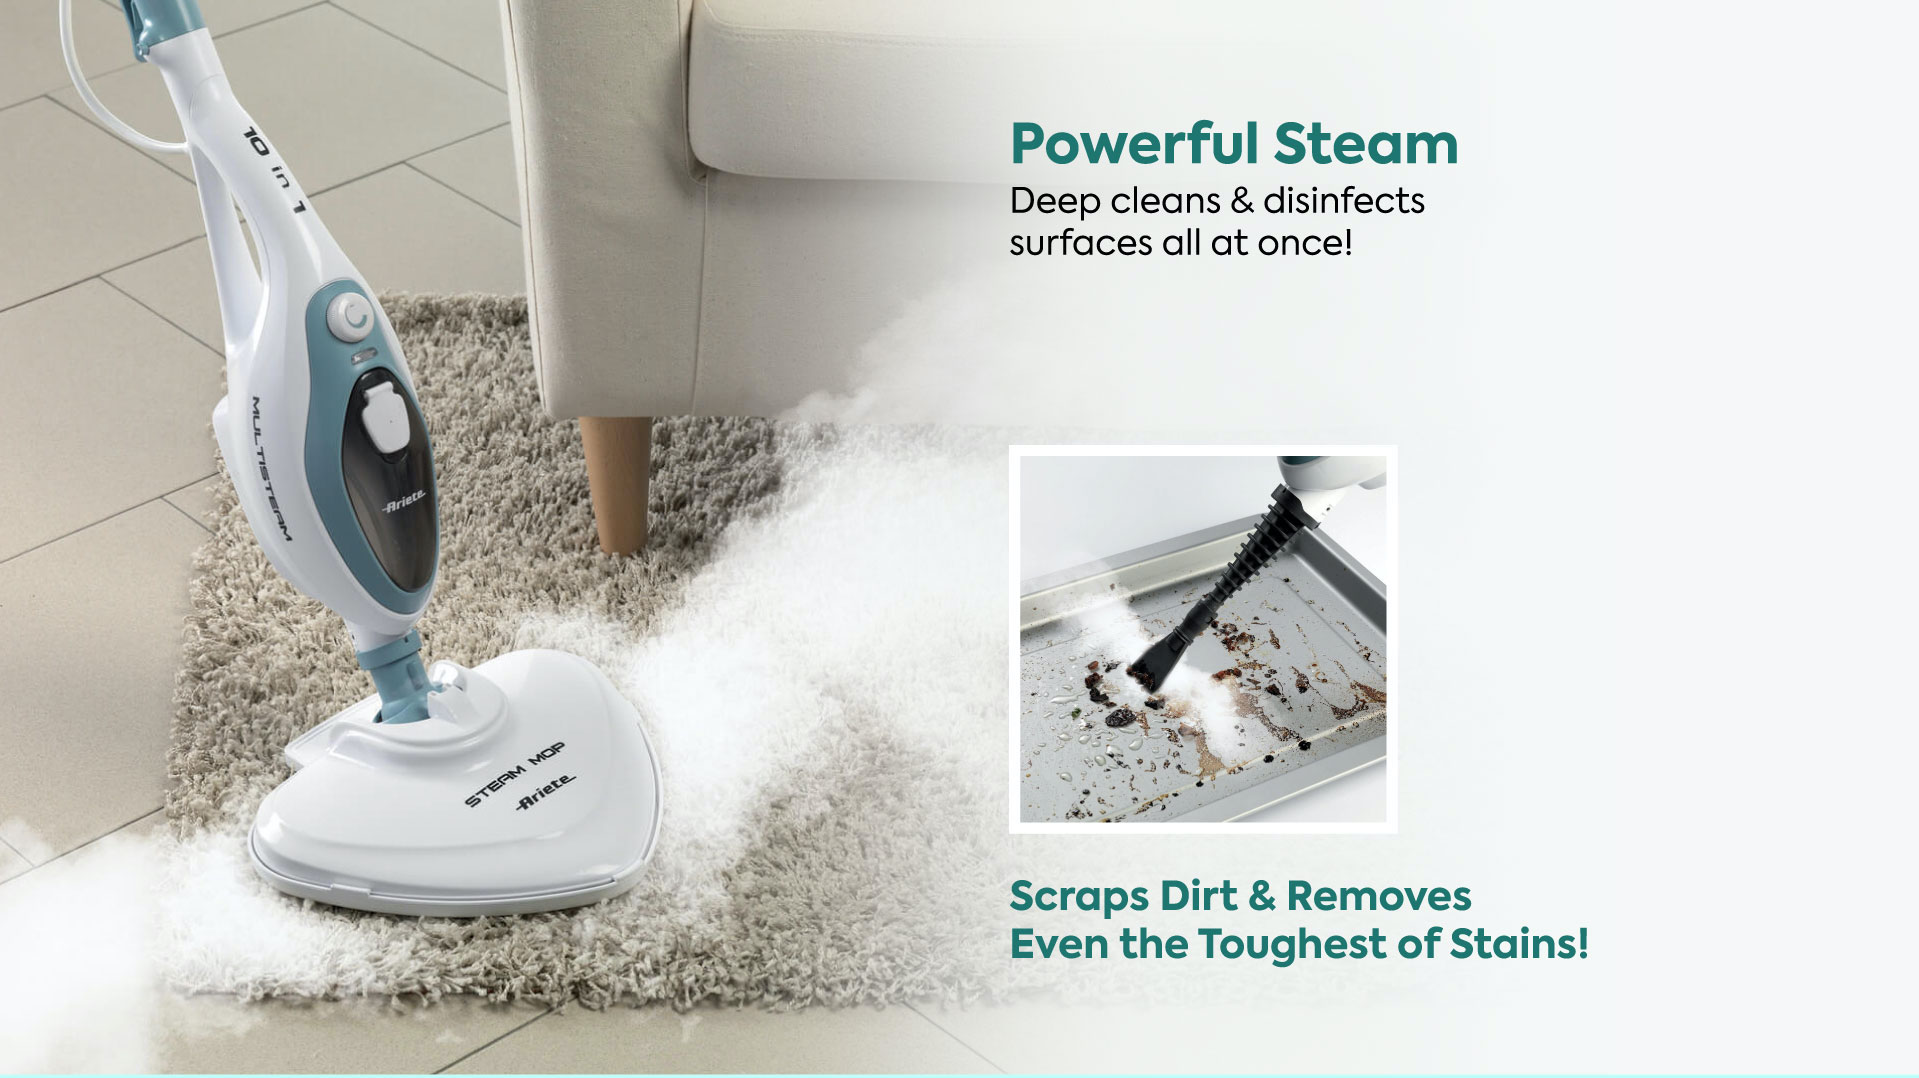 Clean steam mop инструкция фото 91